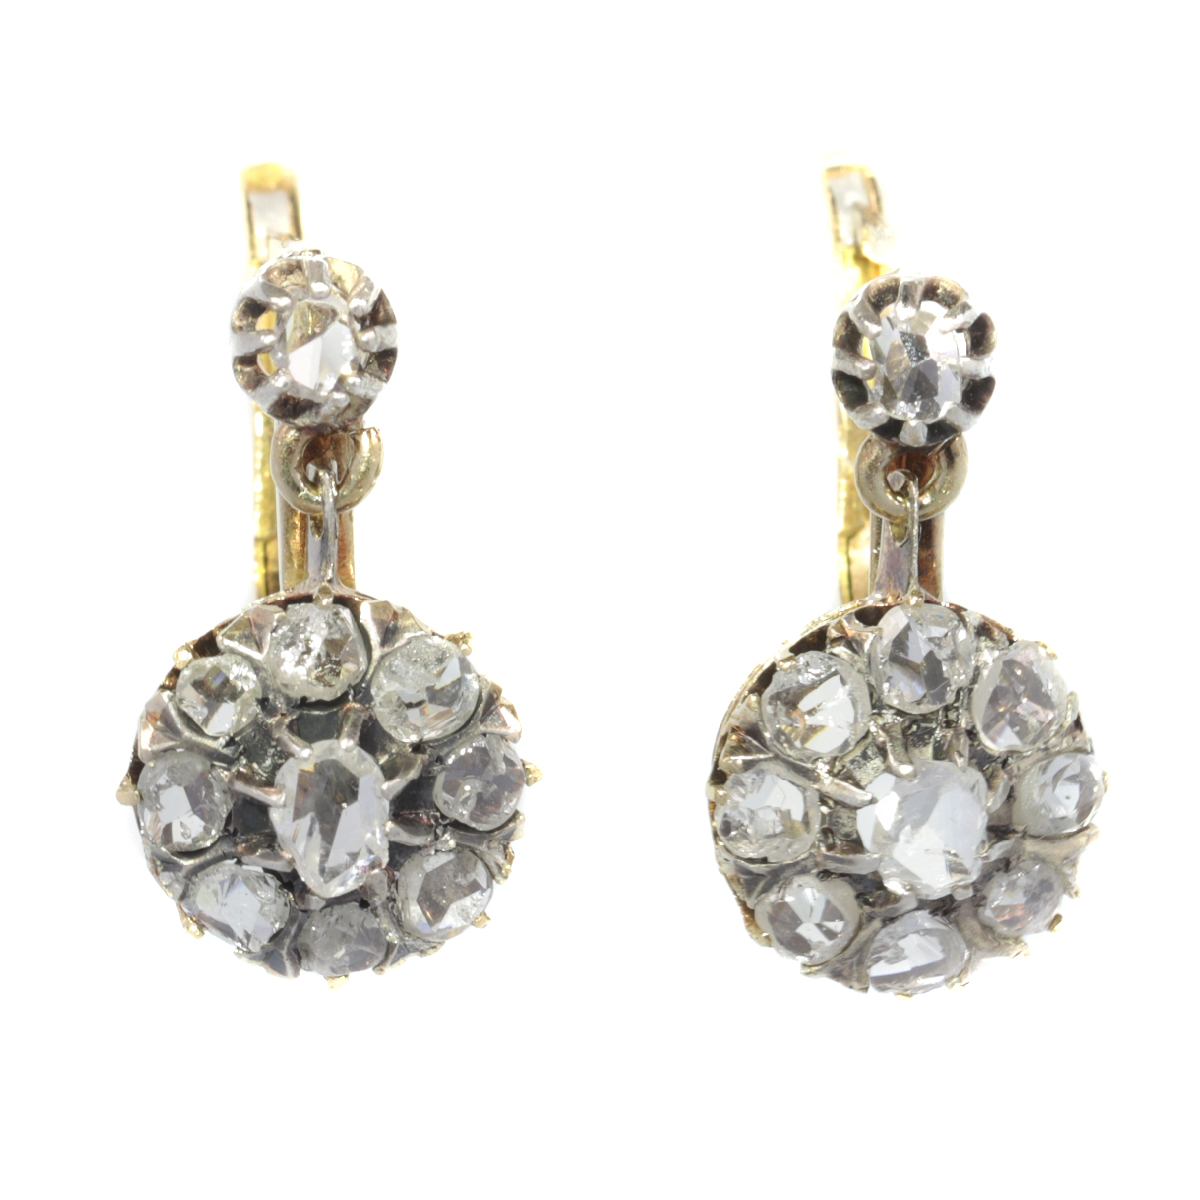 Vintage antique late Victorian rose cut diamond earrings